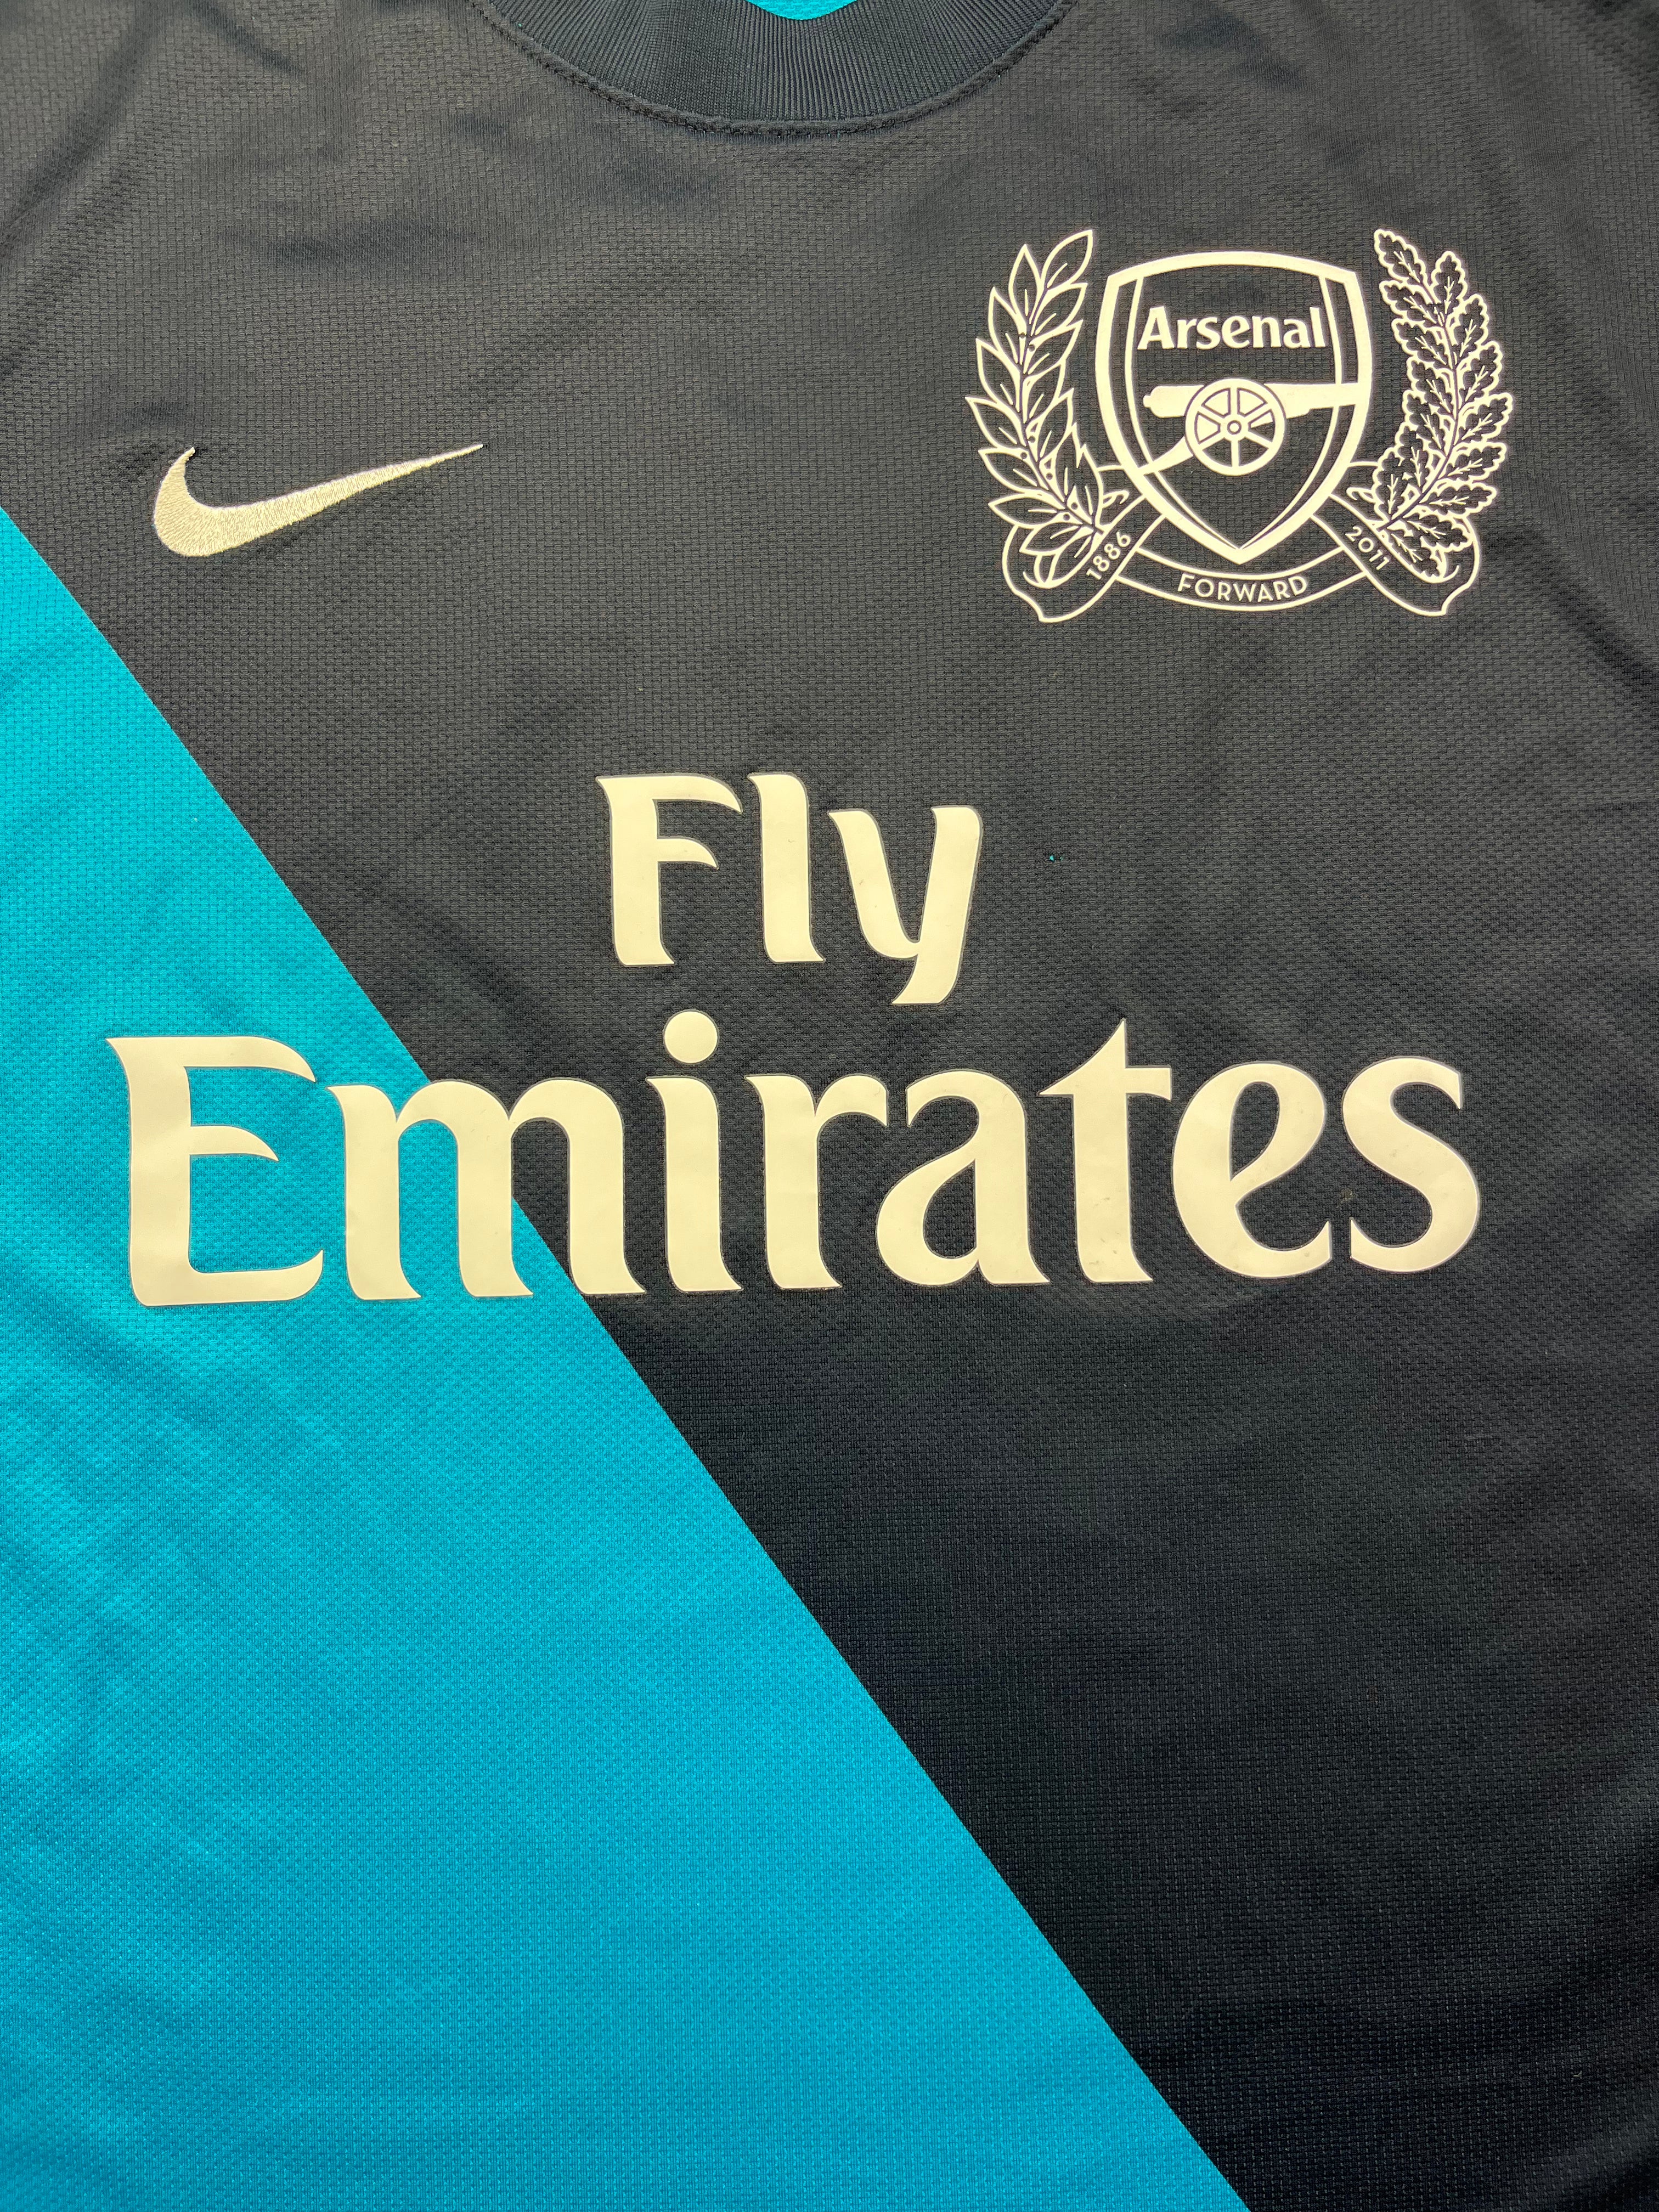 2011/12 Arsenal ‘125th Anniversary’ Away Shirt A.Santos #11 (L) 9/10